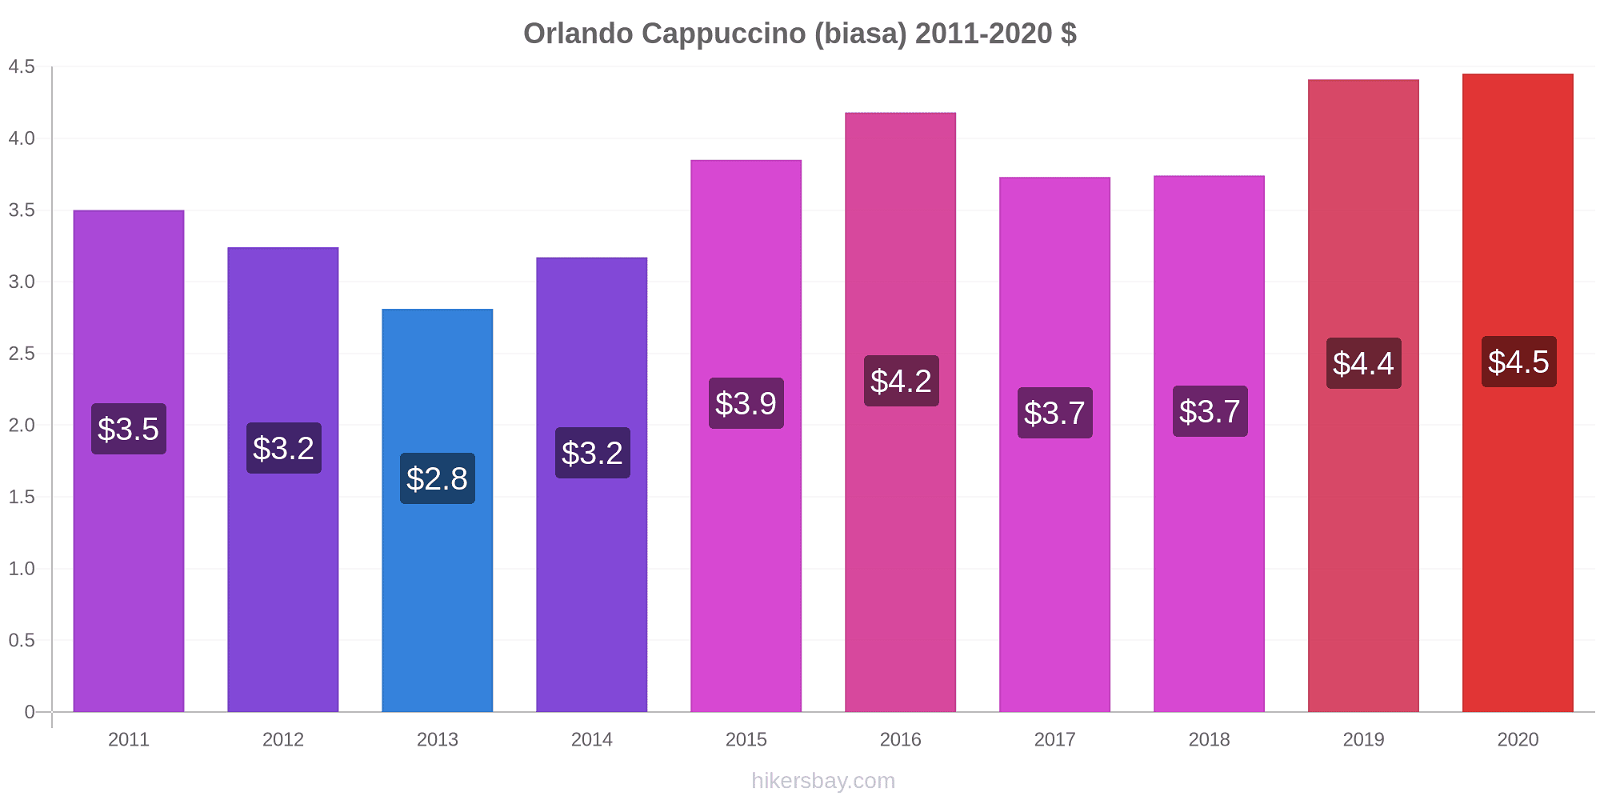 Orlando perubahan harga Cappuccino (biasa) hikersbay.com